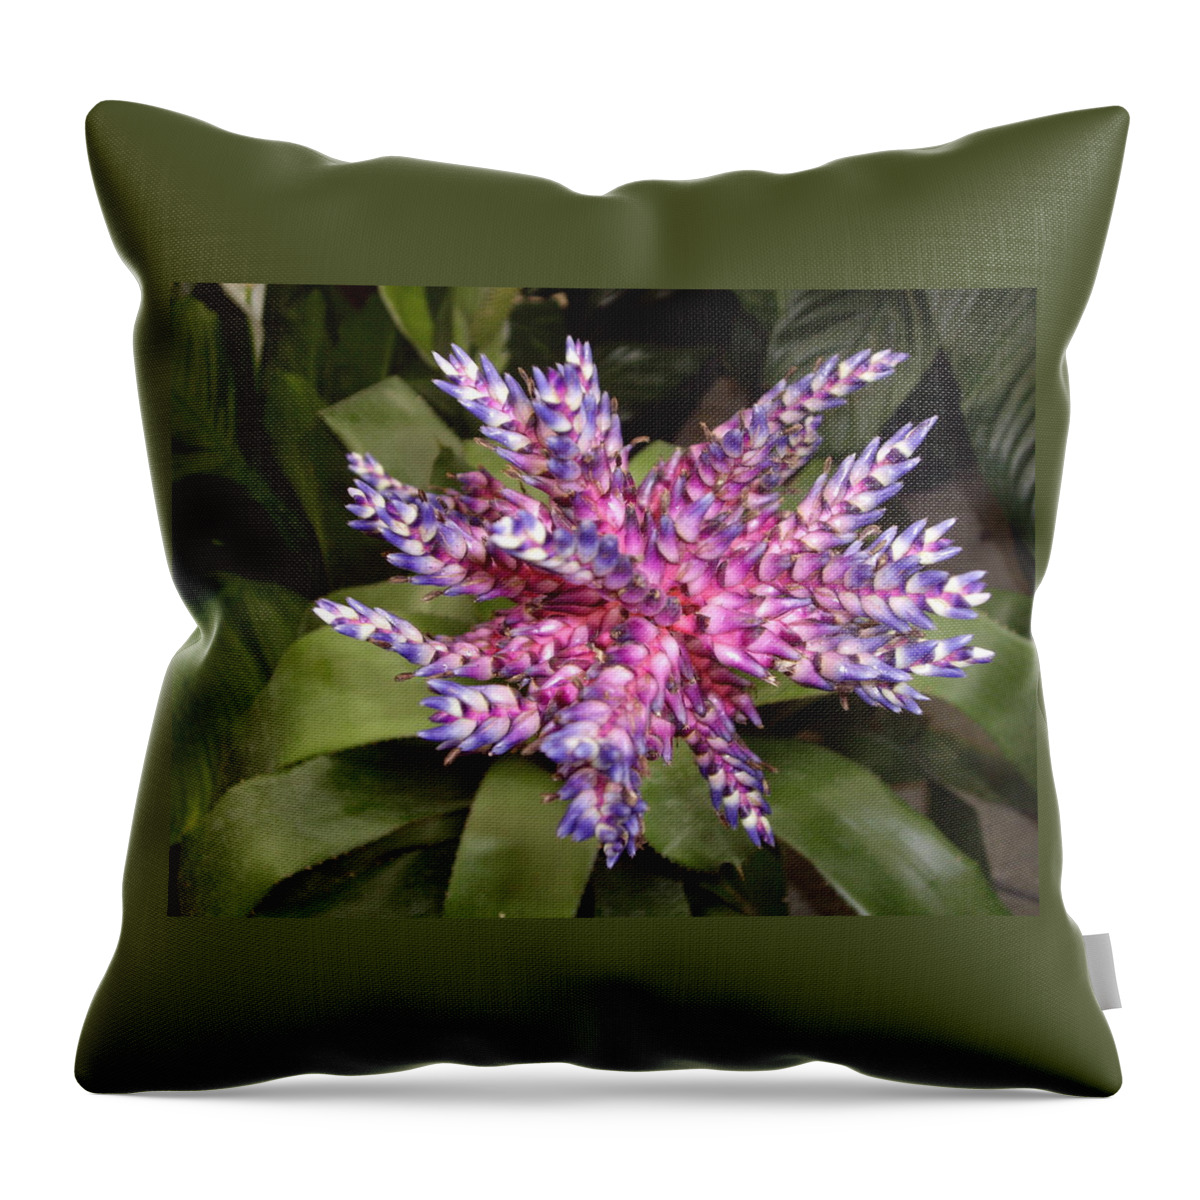 Bromeliad Throw Pillow featuring the photograph Bromeliad pink, purple, blue flower by Nancy Ayanna Wyatt